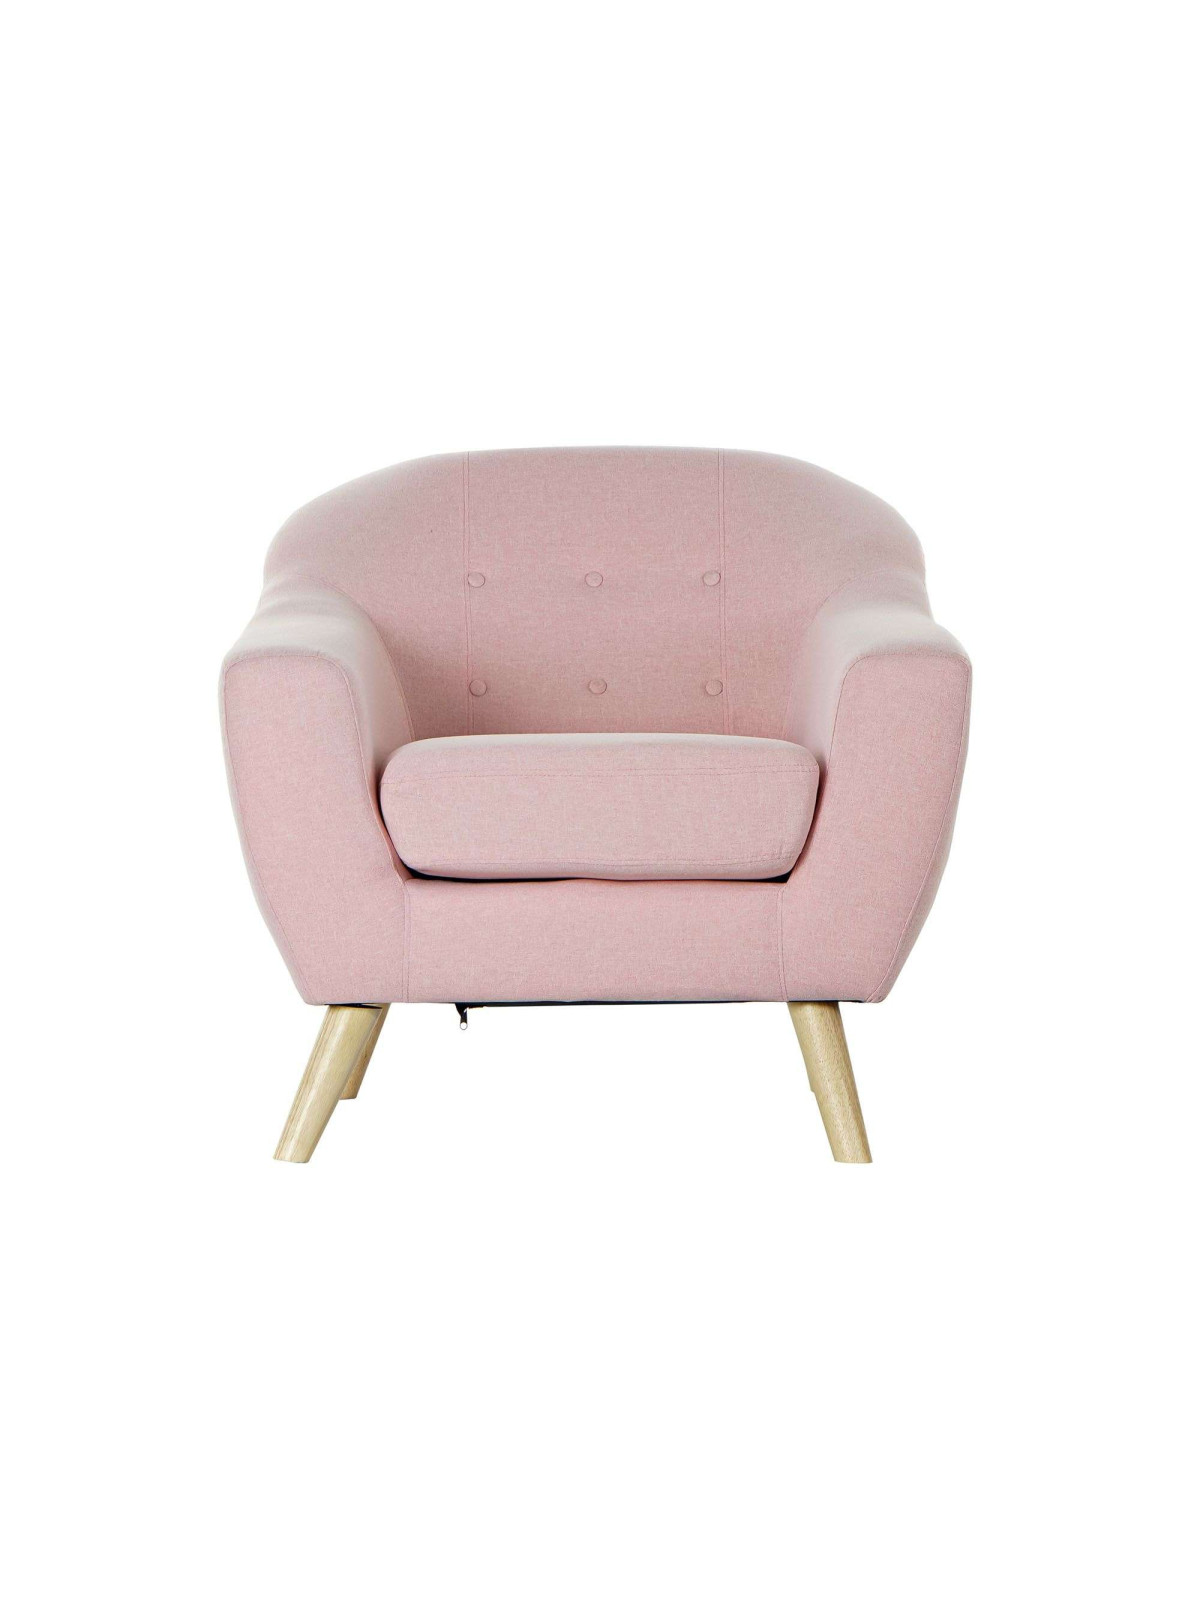 https://www.legrenierdejuliette.com/41777-product_zoom/fauteuil-rose-pale-scandinave.jpg